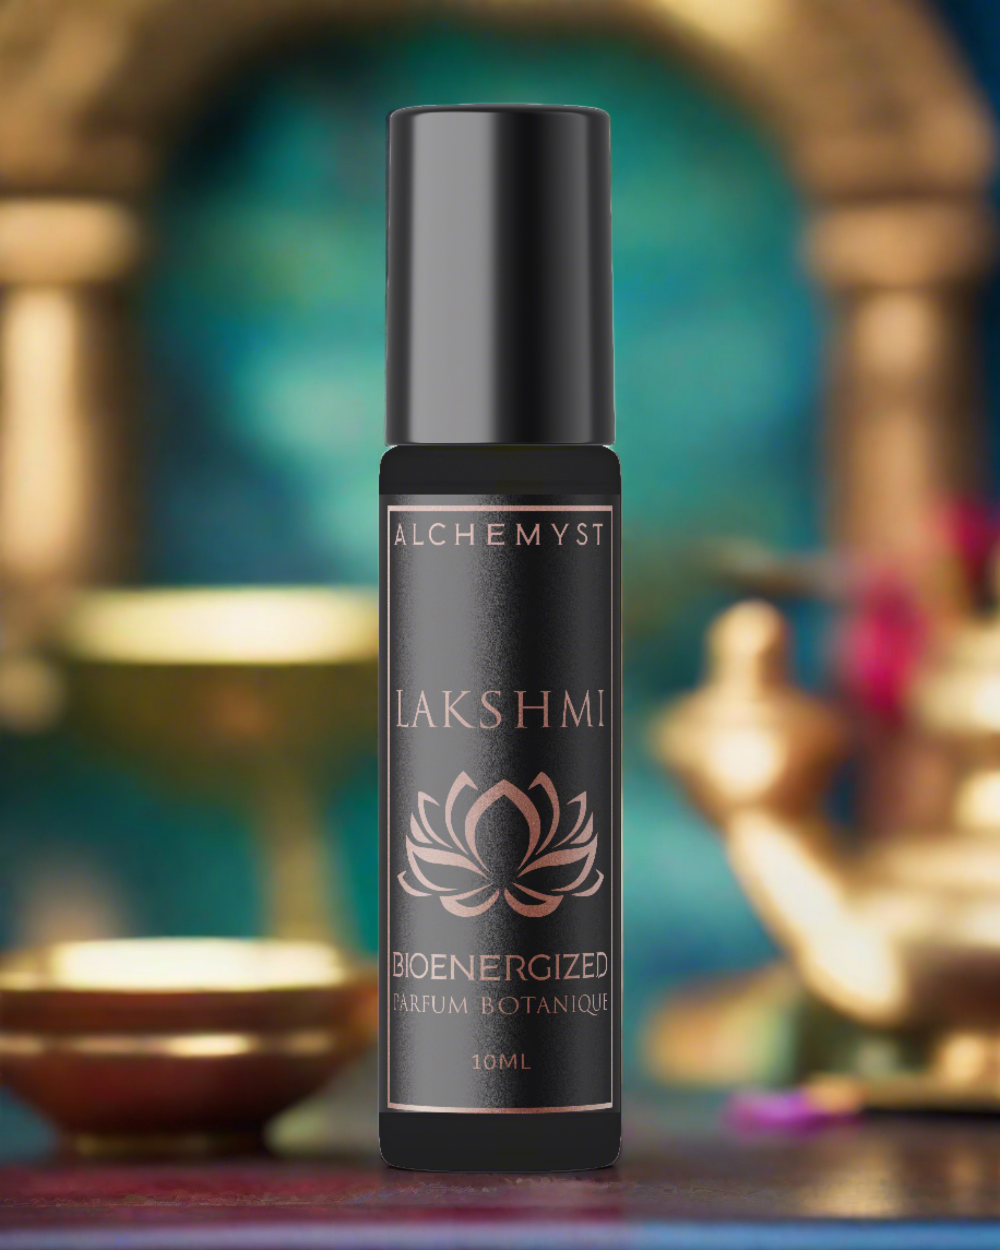 LAKSHMI - Bioenergized Goddess Natural Perfume Oil Alchemyst Co